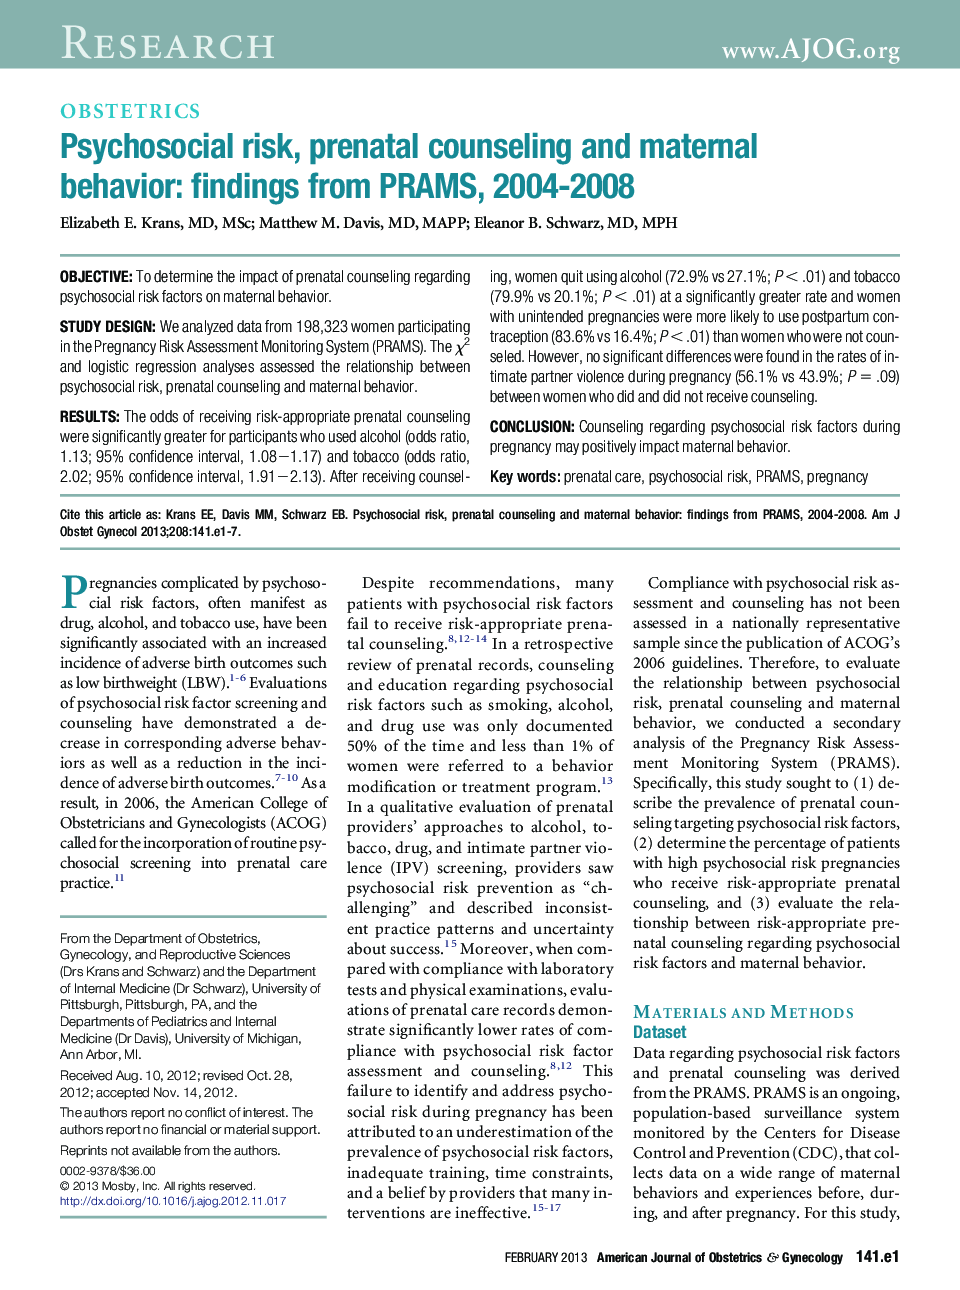 Psychosocial risk, prenatal counseling and maternal behavior: findings from PRAMS, 2004-2008